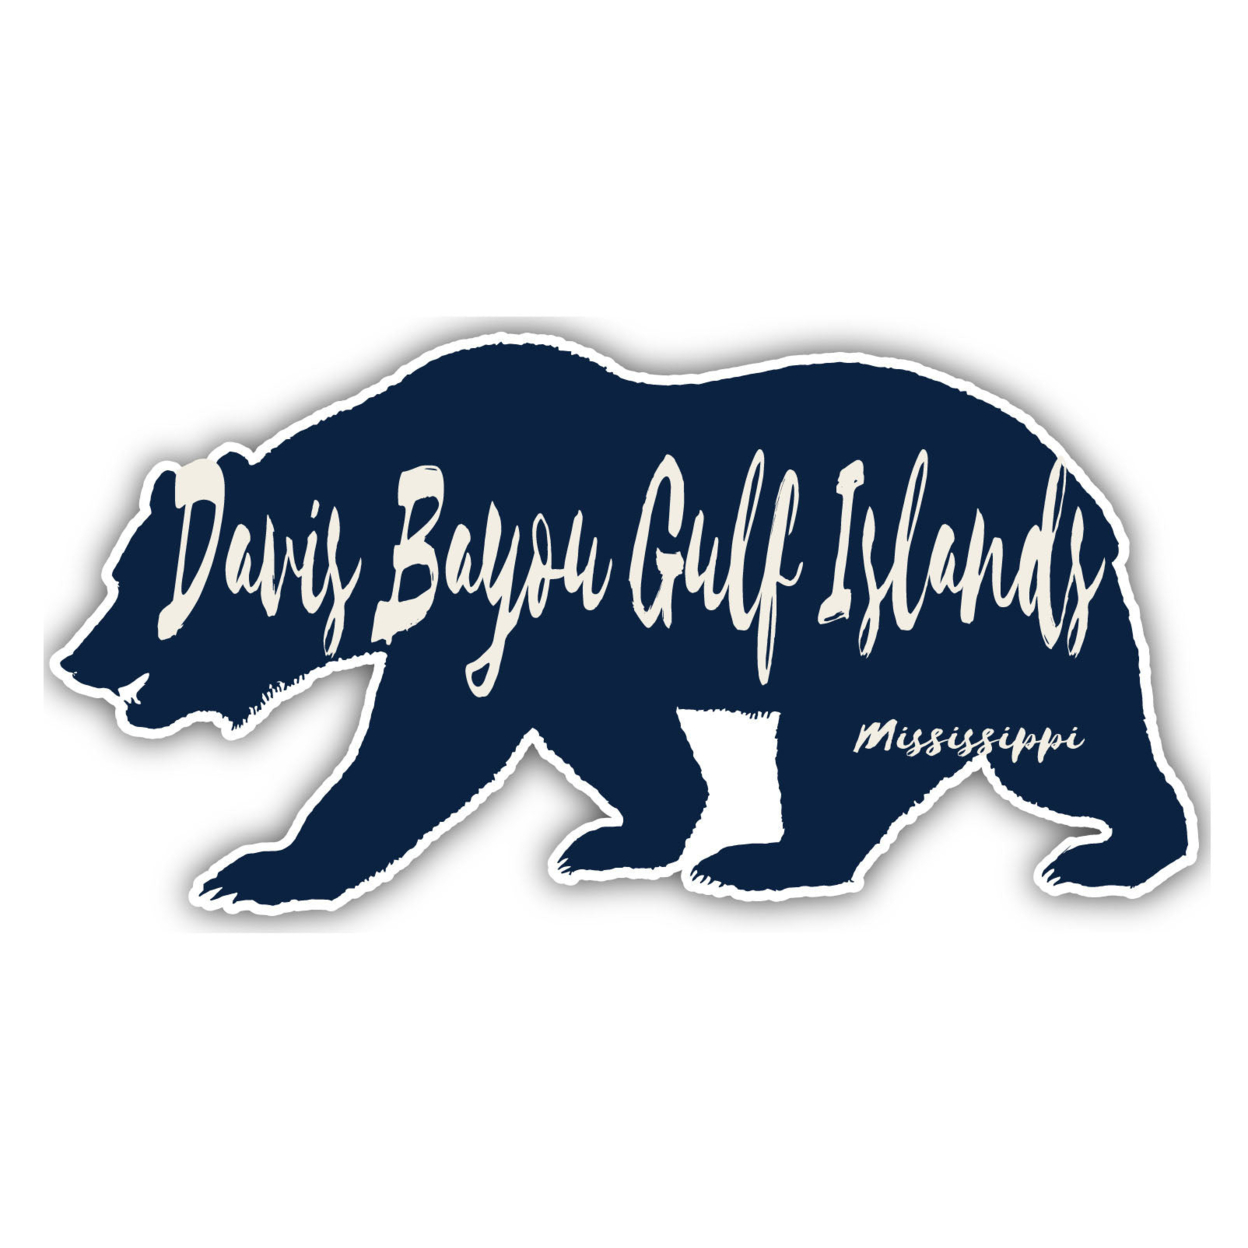 Davis Bayou Gulf Islands Mississippi Souvenir Decorative Stickers (Choose Theme And Size) - Single Unit, 4-Inch, Bear